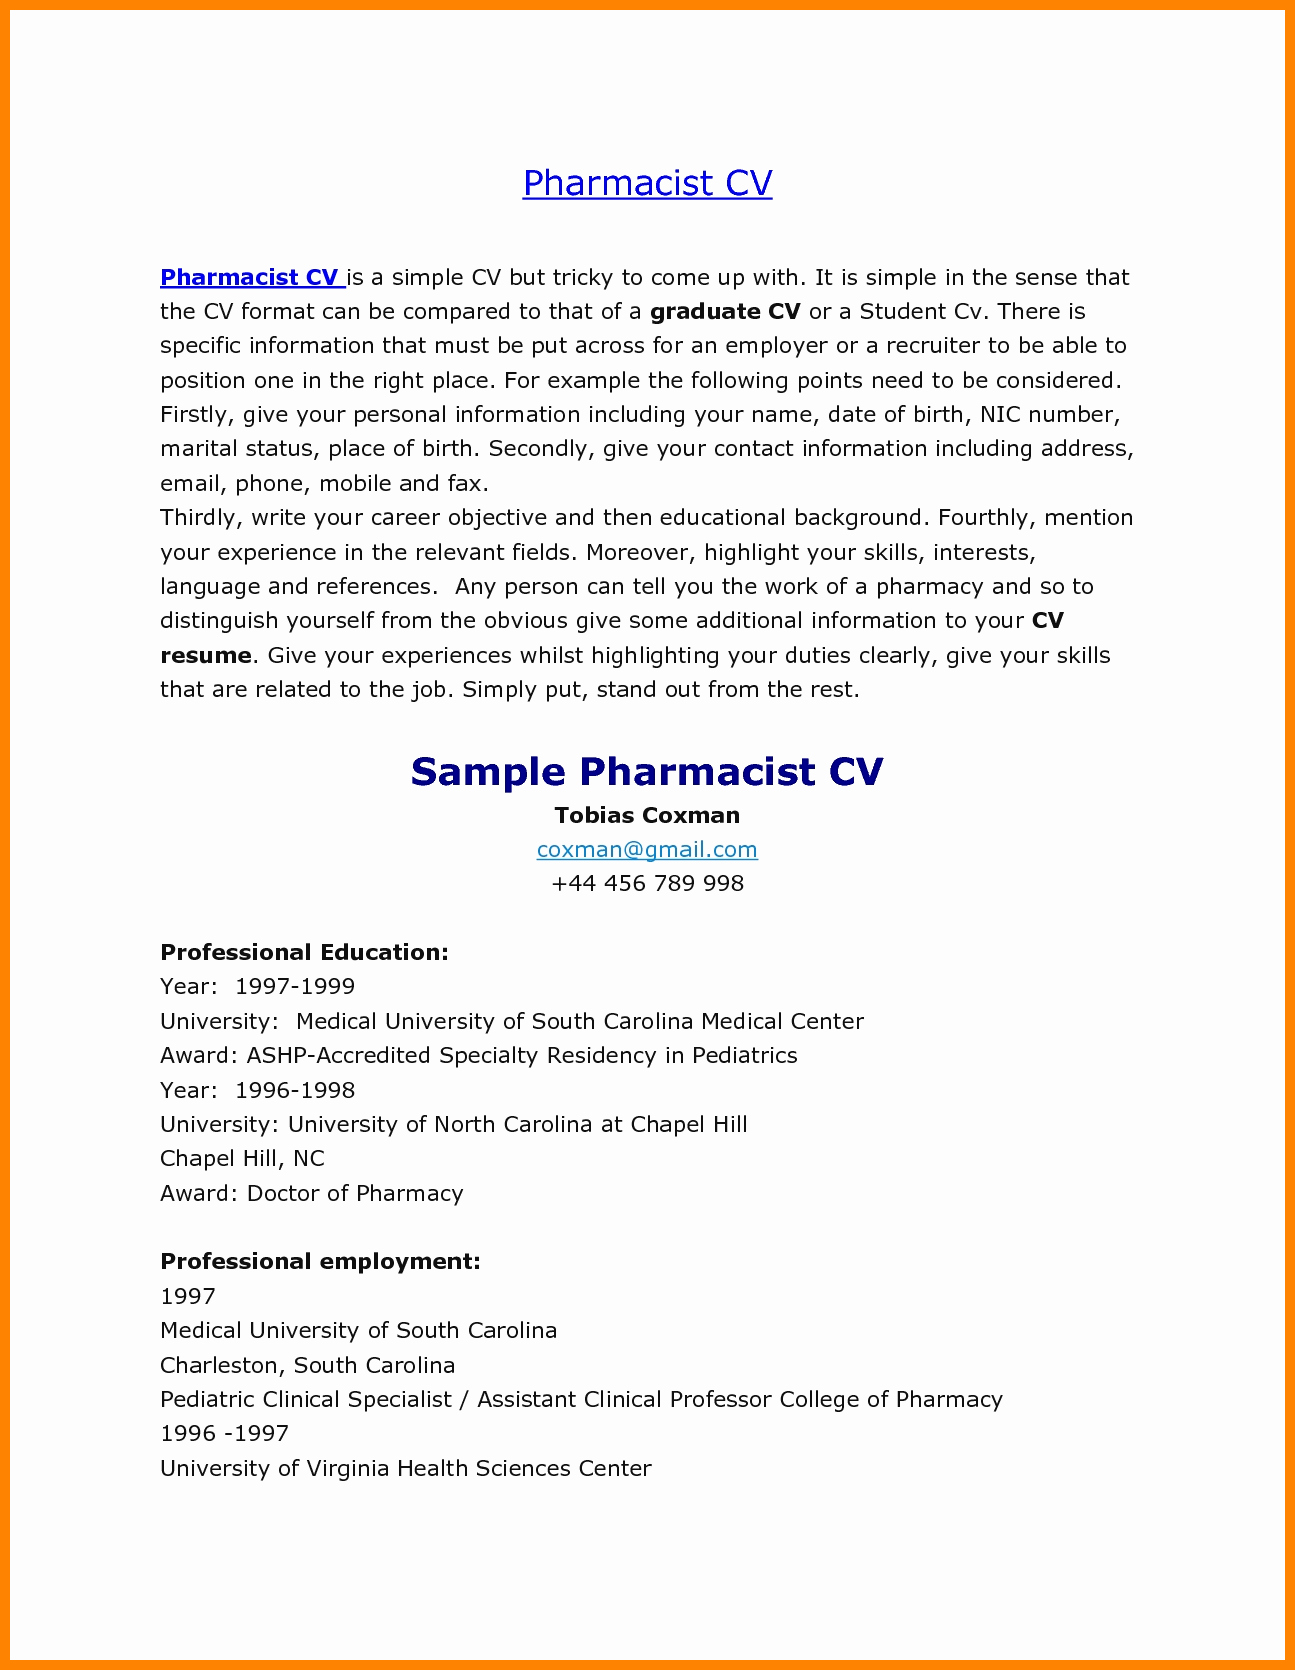 Pharmacy Curriculum Vitae Examples New 6 Cv Samples for Pharmacists